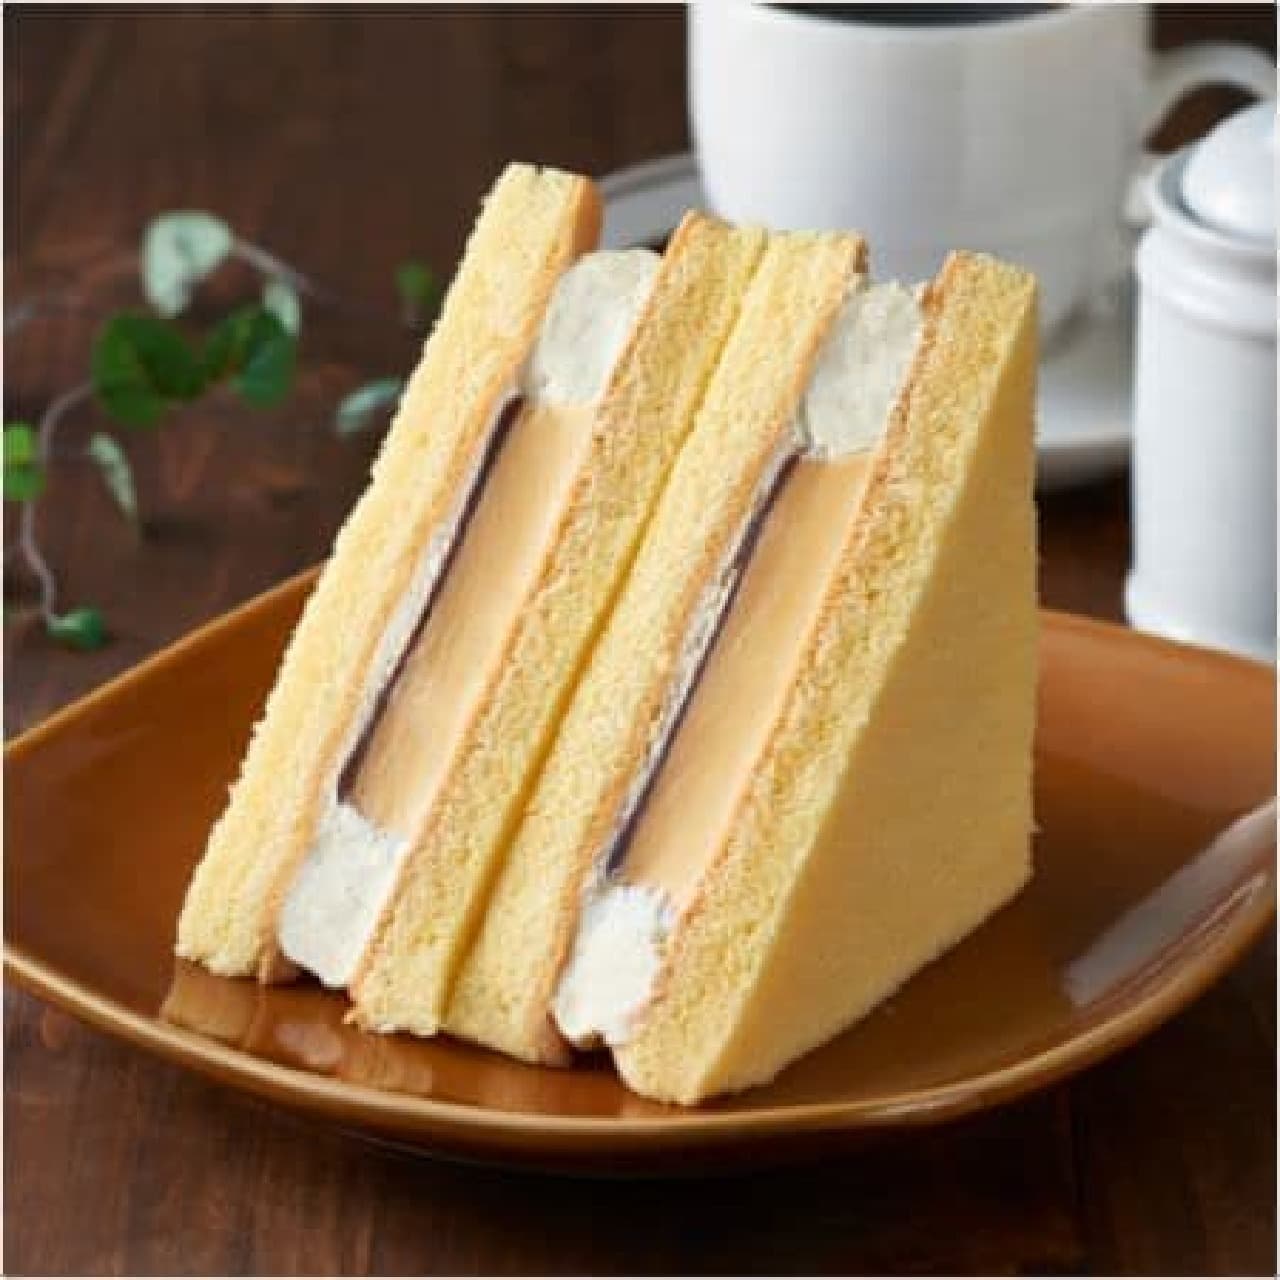 FamilyMart "Pudding Fluffy Cake Sandwich"